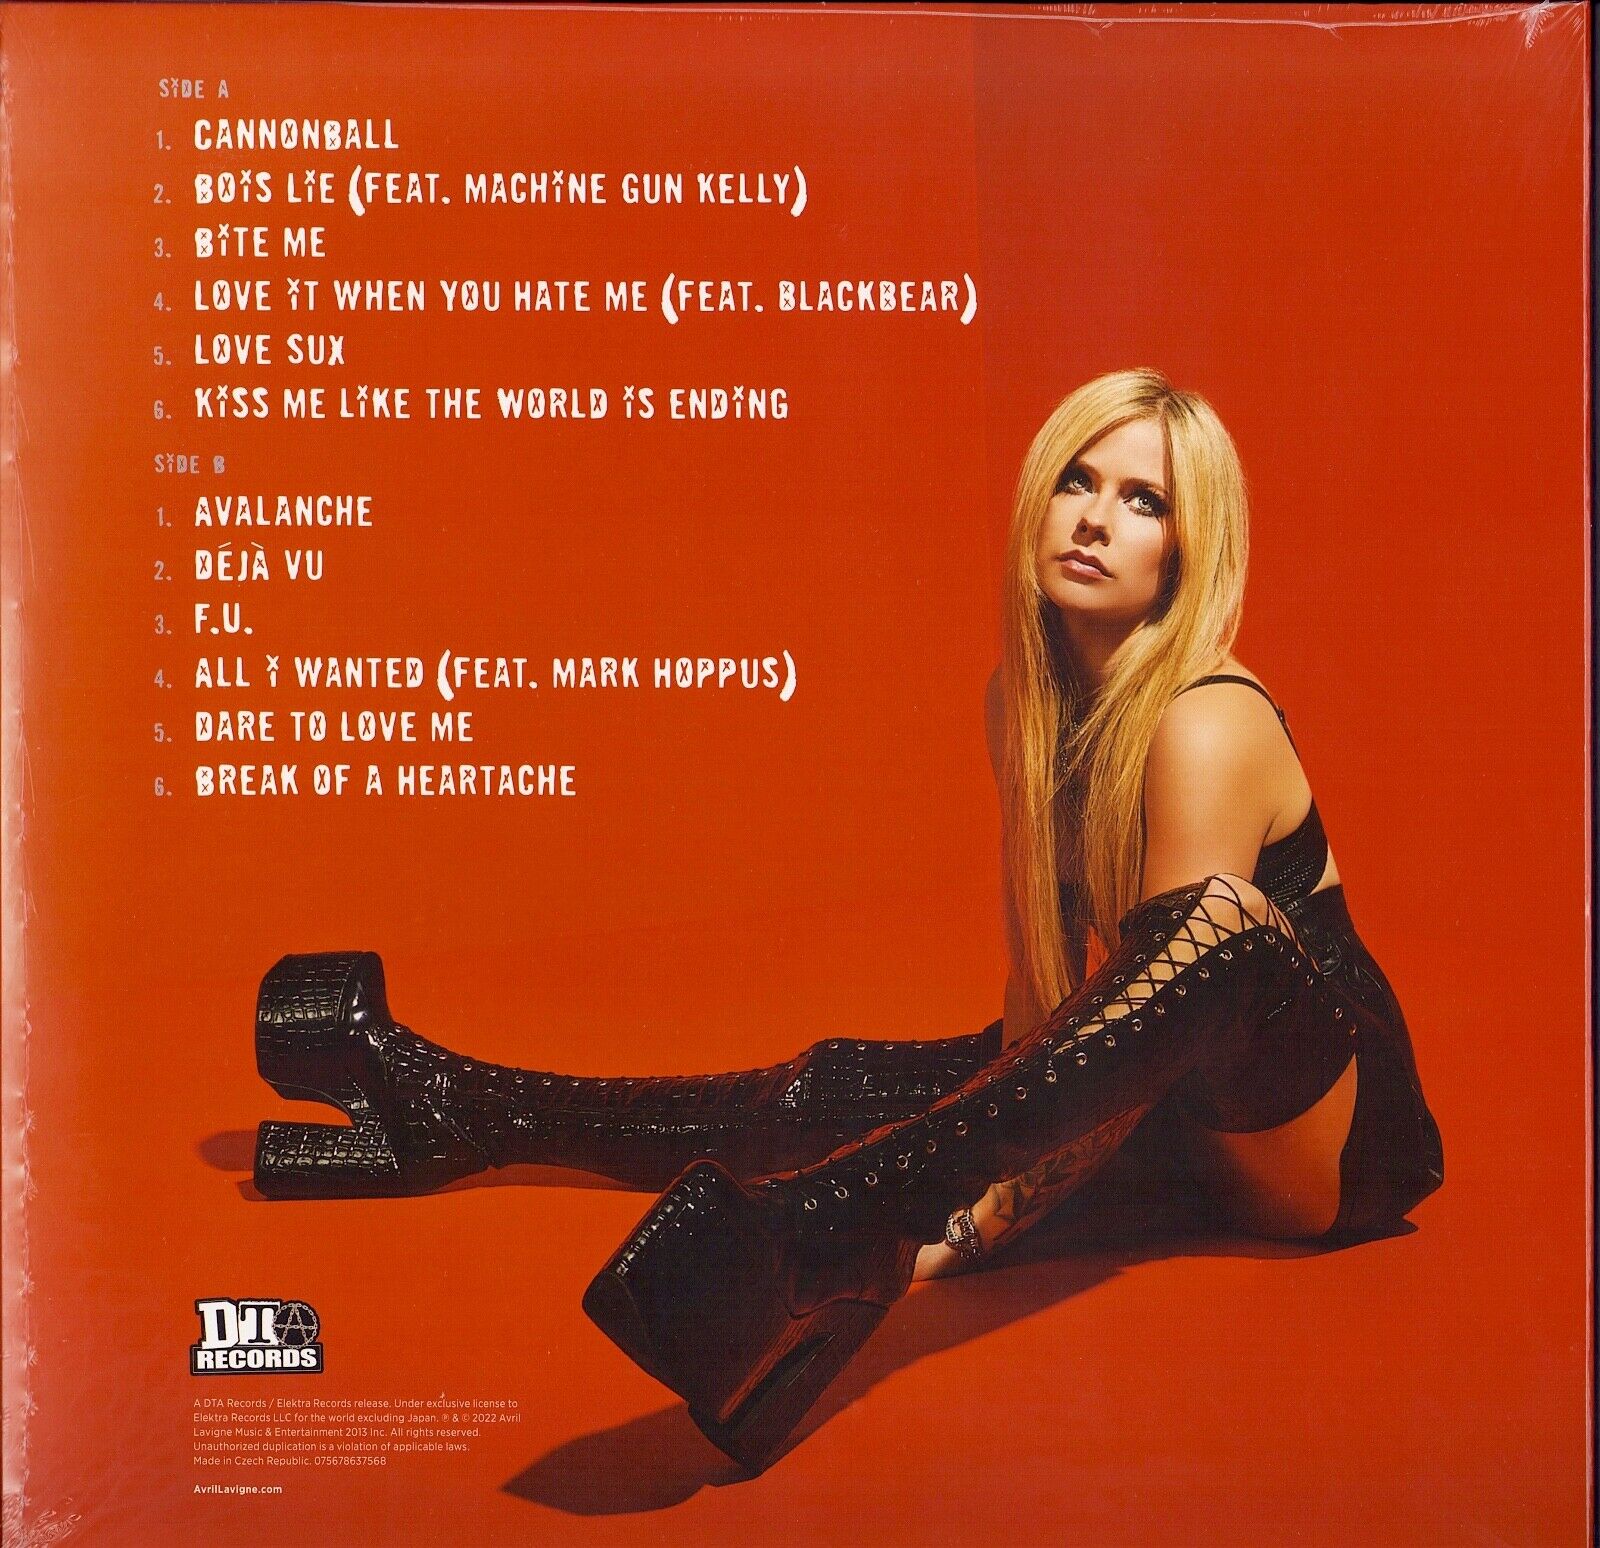 Avril Lavigne - Love Sux (Transparent Red Vinyl LP) Limited Edition